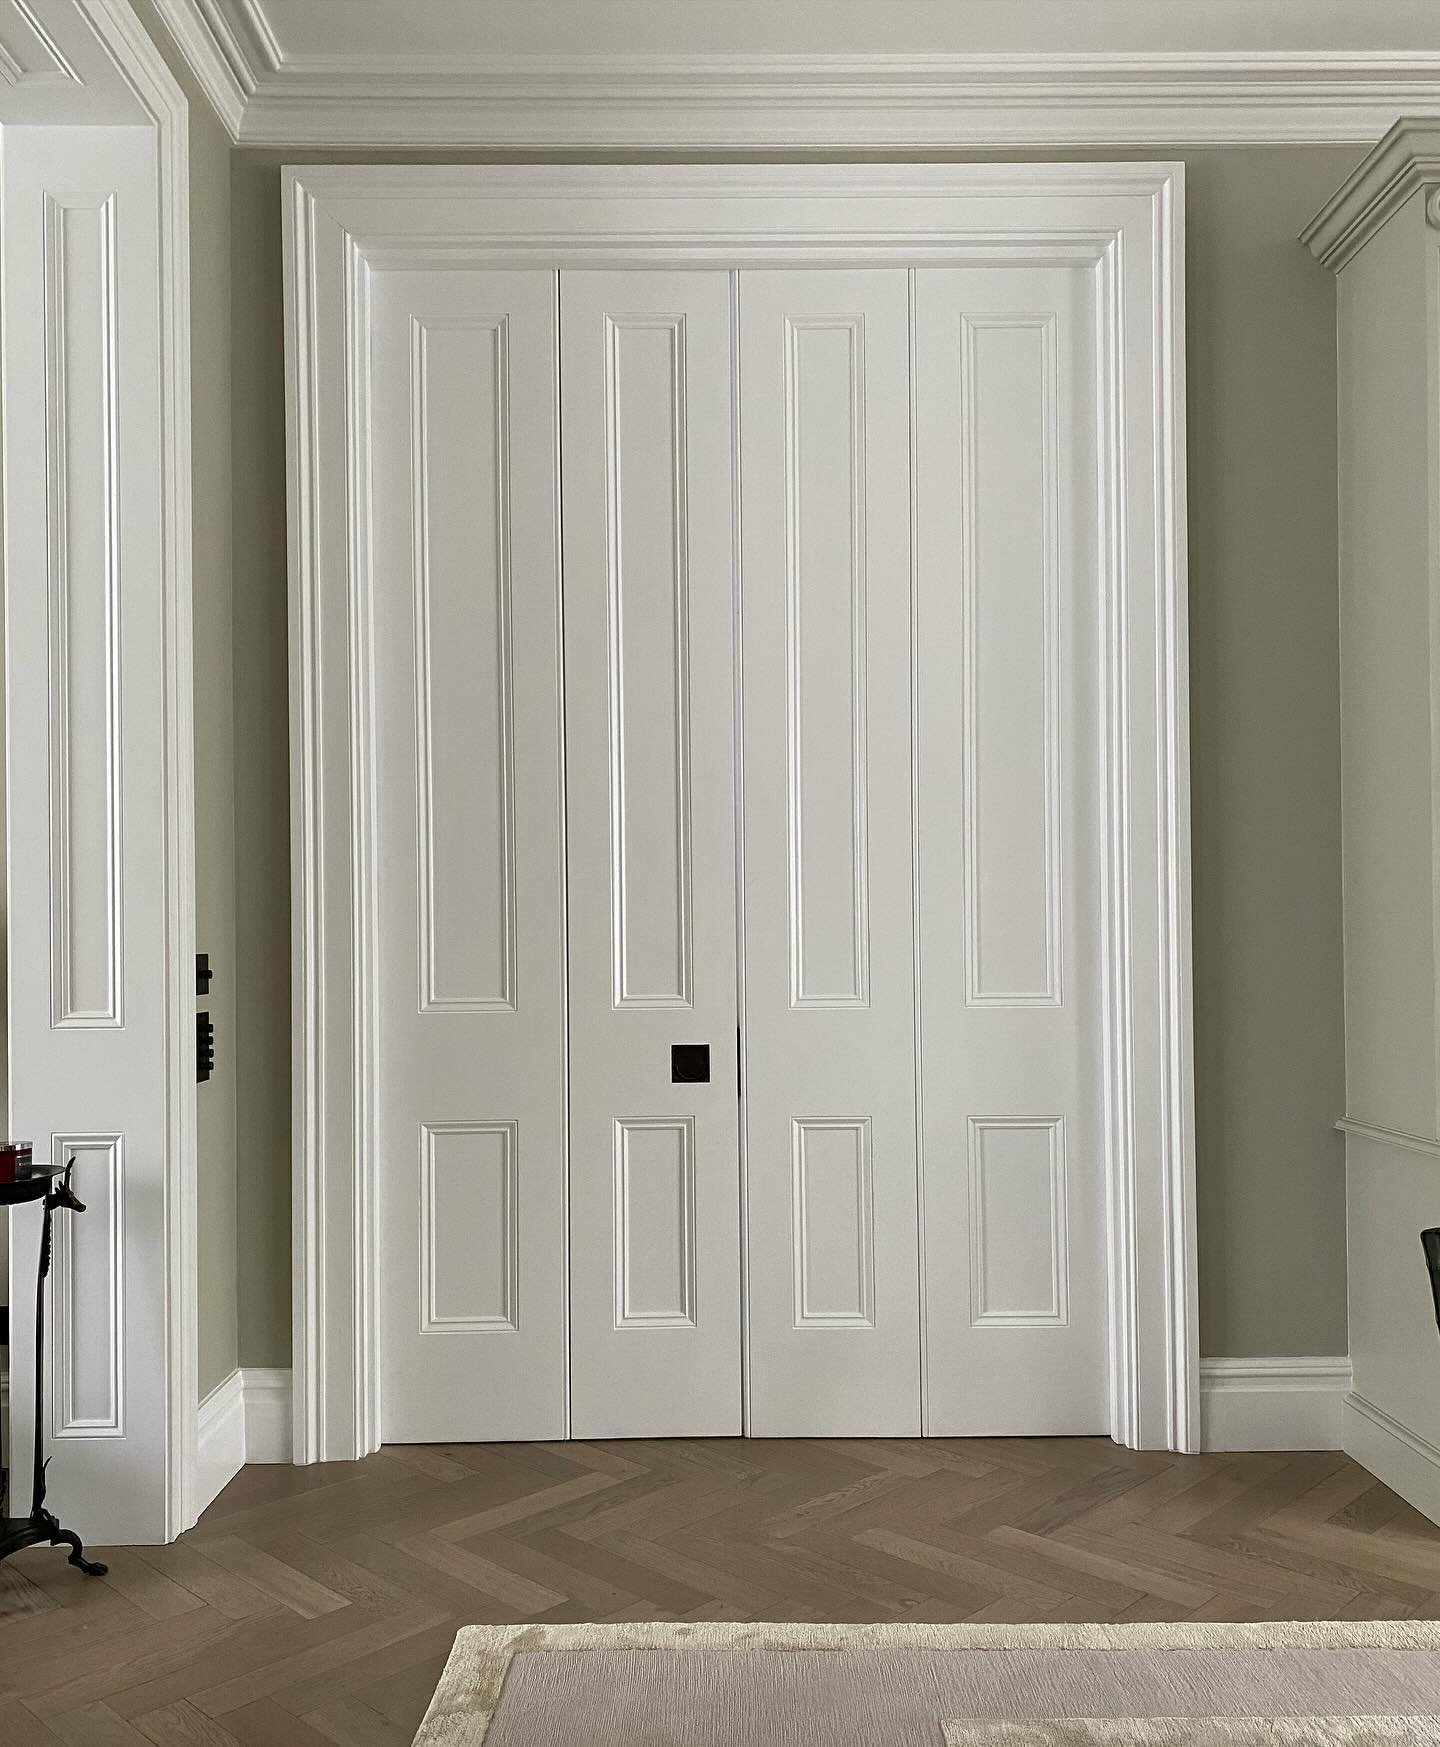 Boxed dividing room doors. Notting Hill. London. 
The original maker.
&bull;
&bull;
&bull;
#livingroom #nottinghill #doors #interiordesign #joinery #theoriginalmaker #home #periodhome #london #palladio #hall #hallway #londonhomes